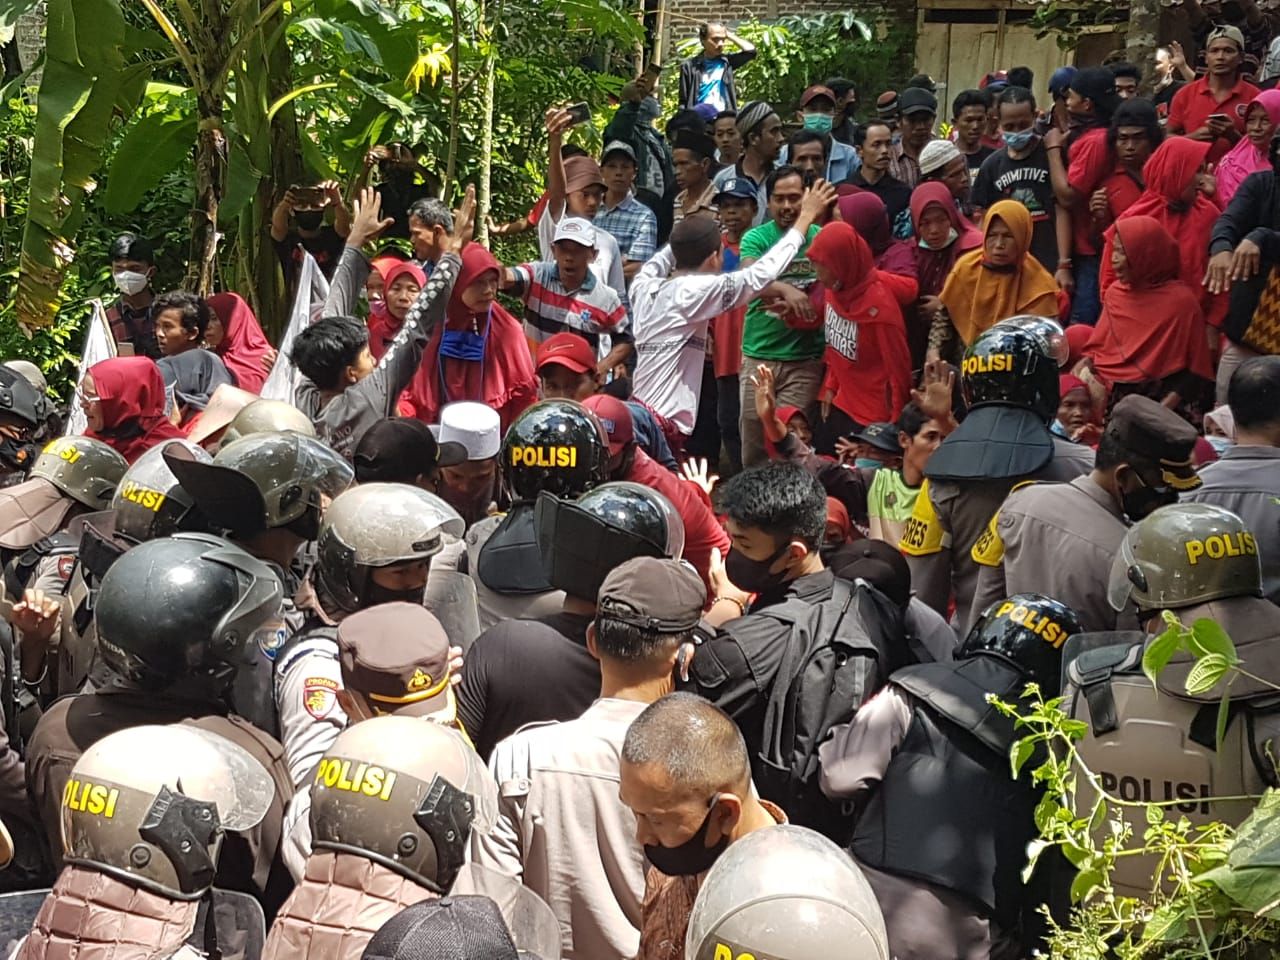 LBH KAI Minta Kepolisian Manusiawi dalam Tangani Persoalan di Wadas – DPP  KAI Kongres Advokat Indonesia